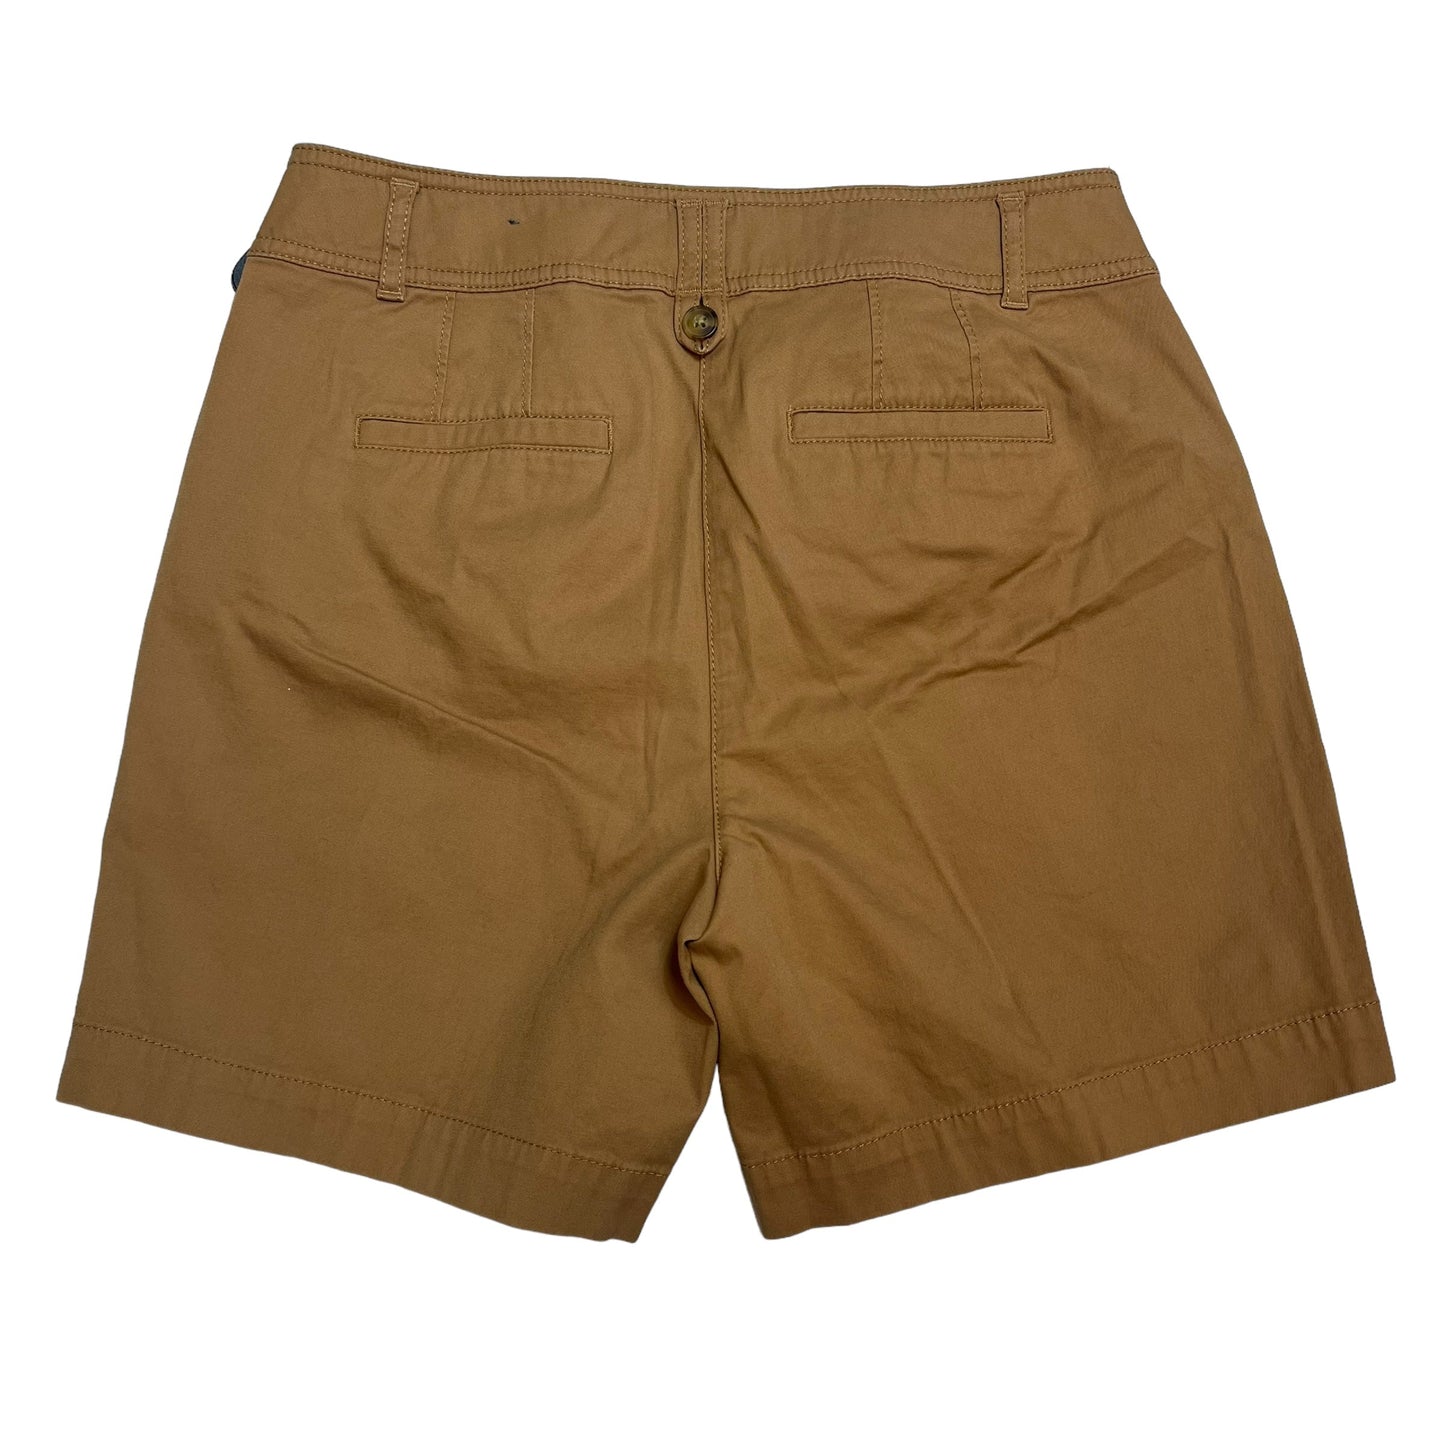 Brown Shorts Talbots, Size 8petite